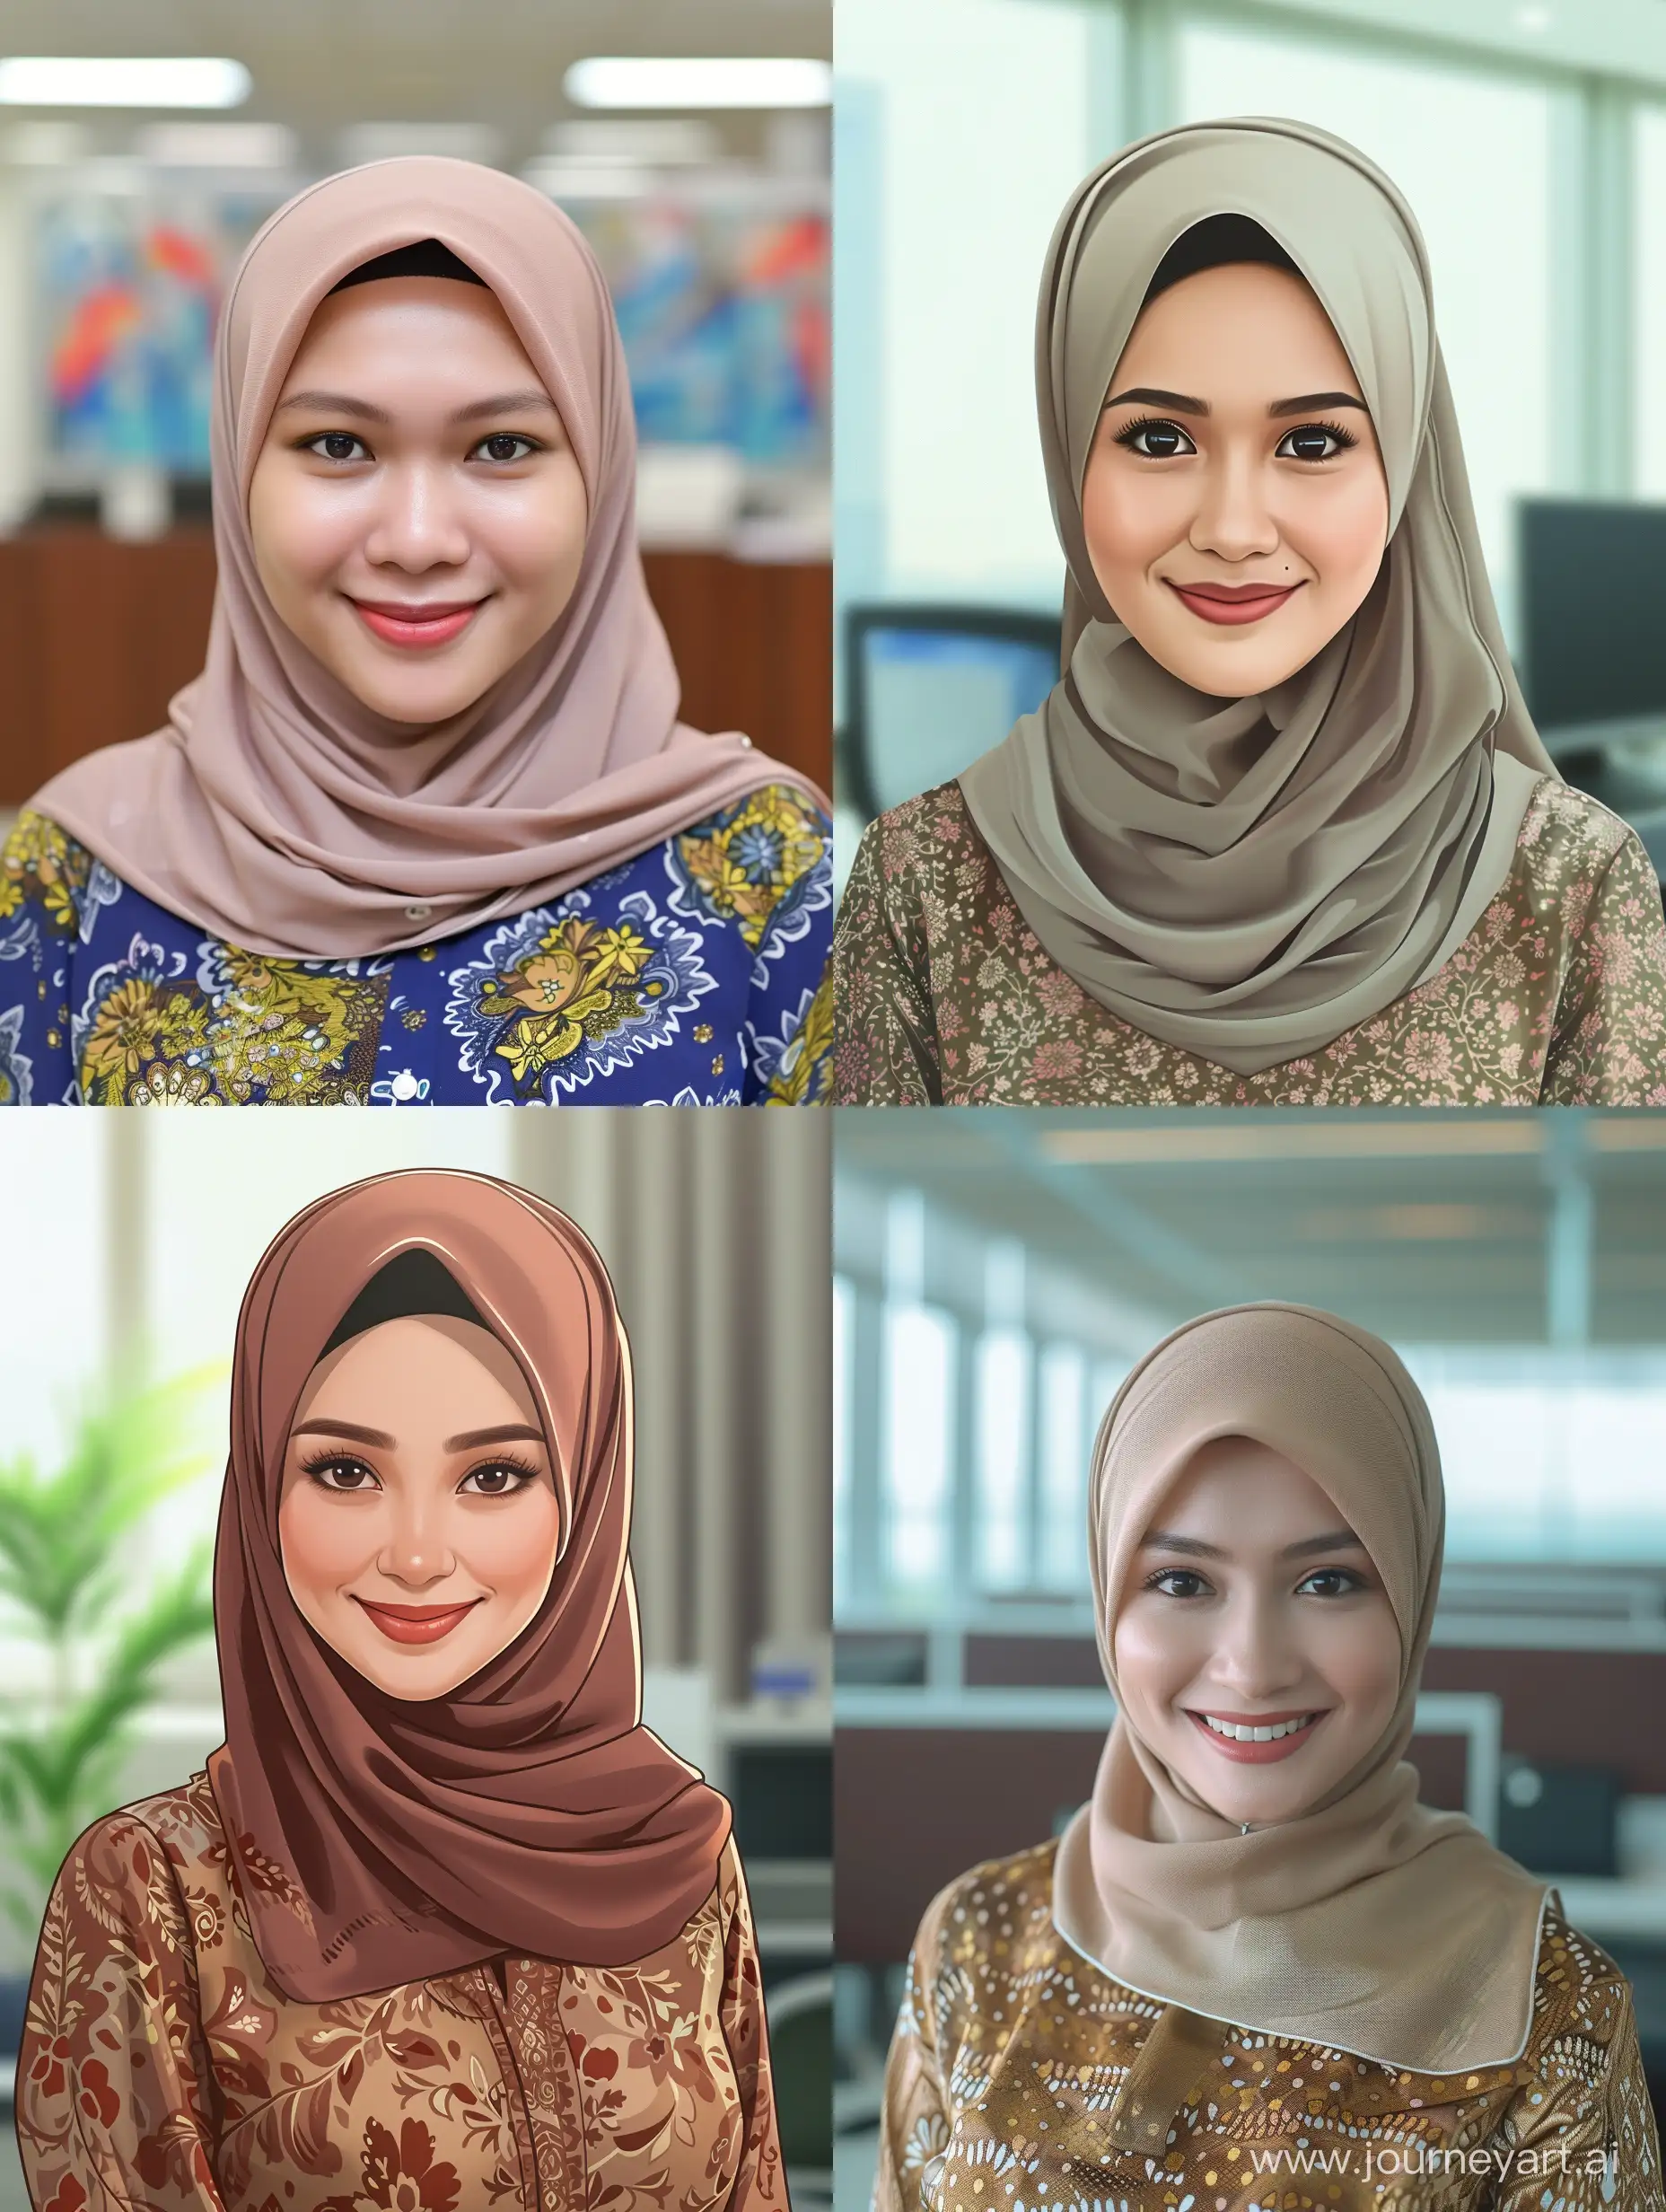 Smiling-Malay-Girl-Civil-Servant-in-Baju-Kurung-at-Government-Office